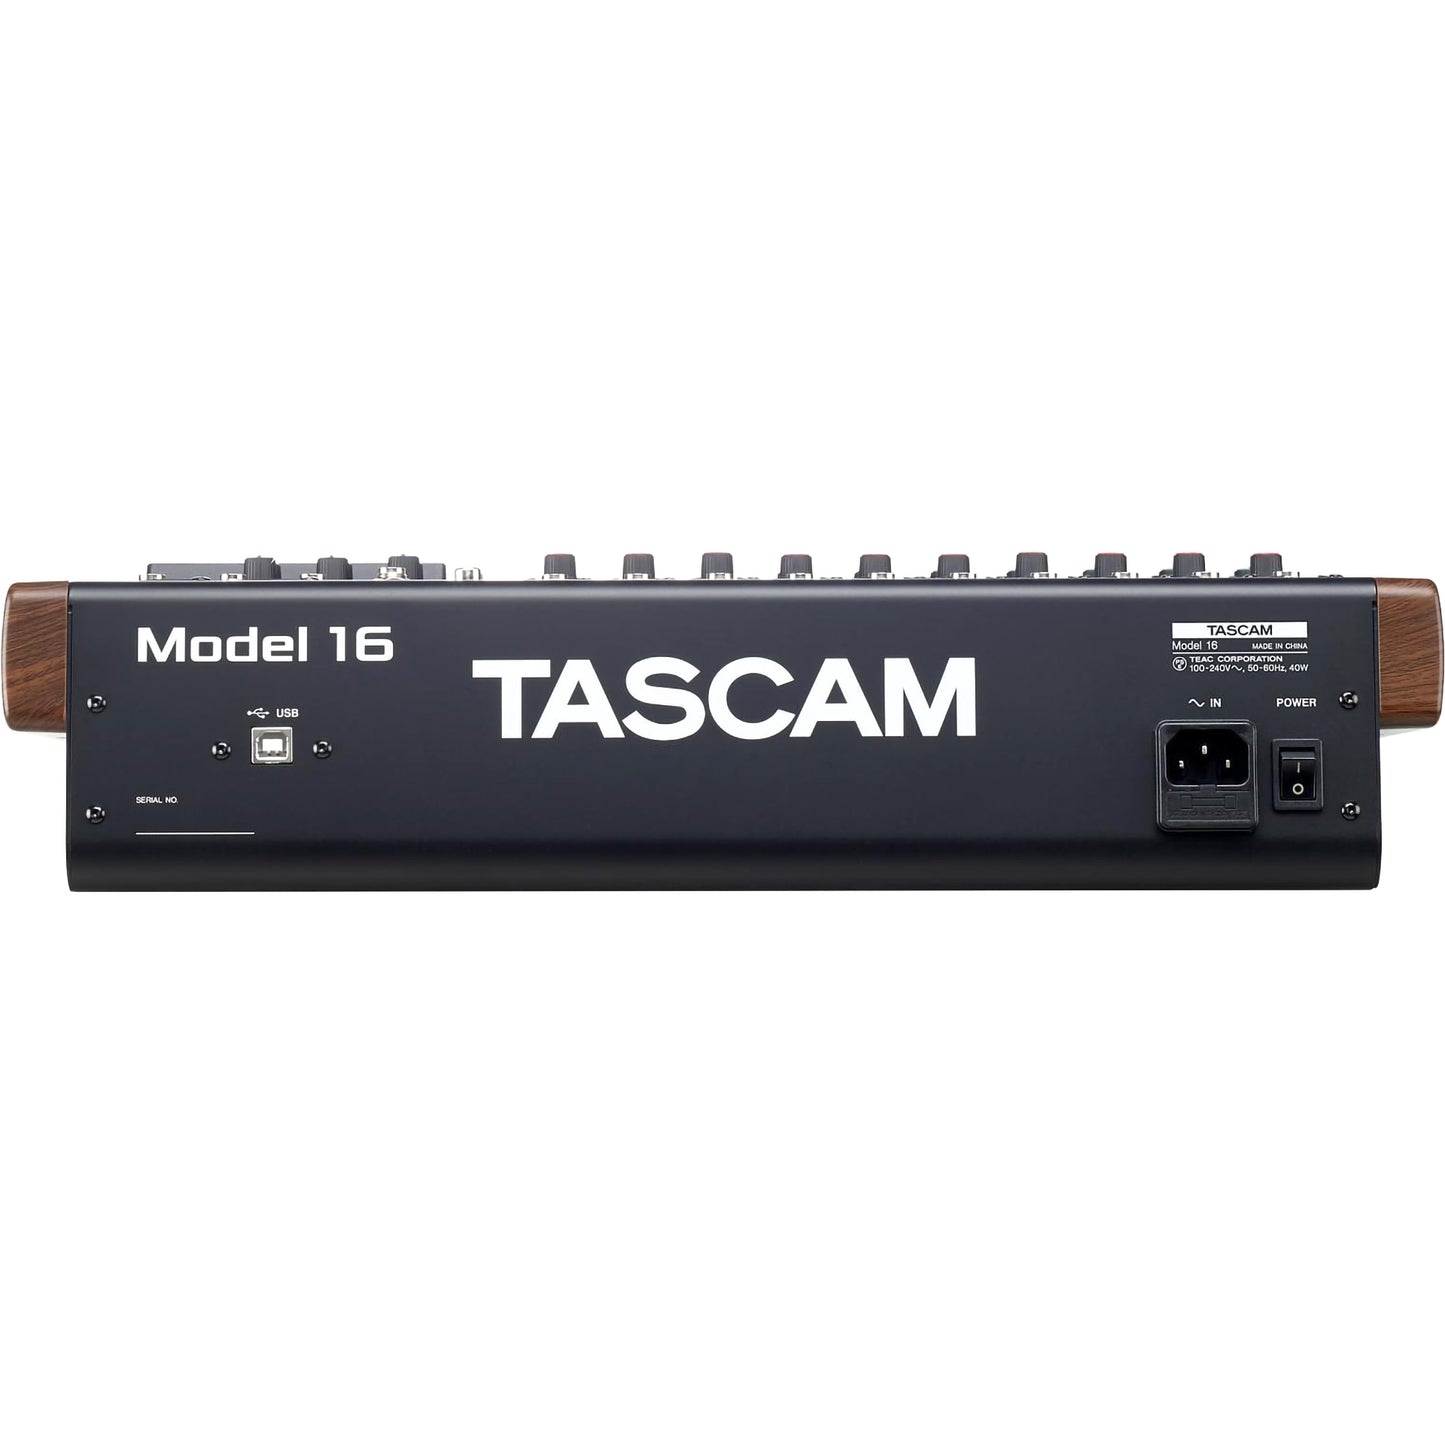 Tascam Model 16 Mixer / Interface / Recorder